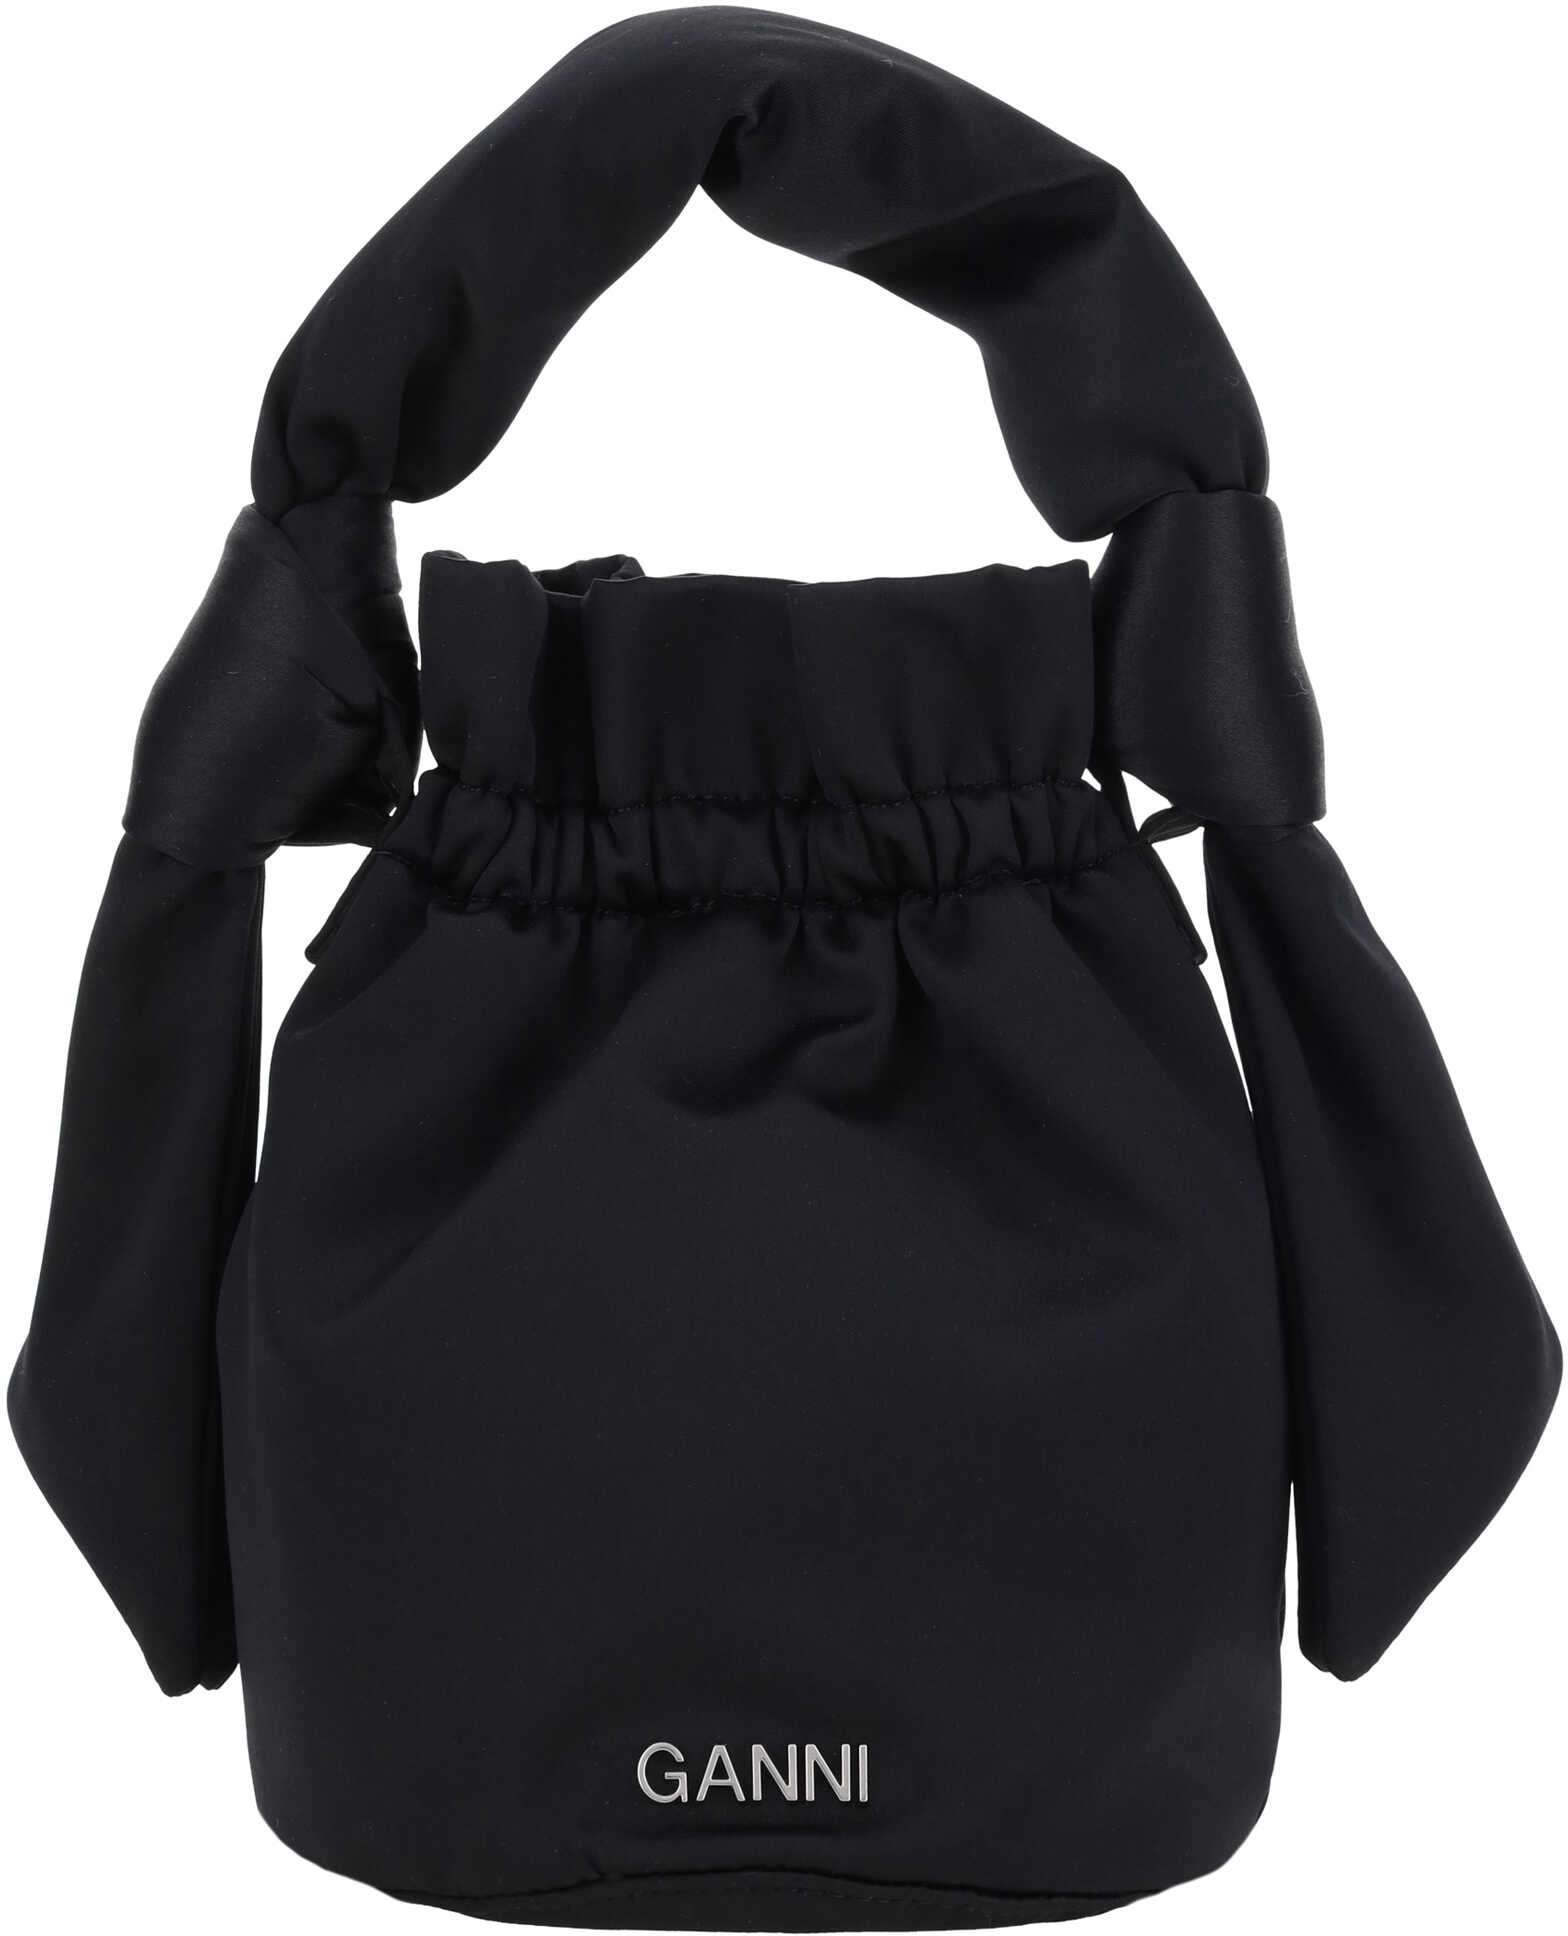 Ganni Occasion Top Bucket Bag BLACK image1